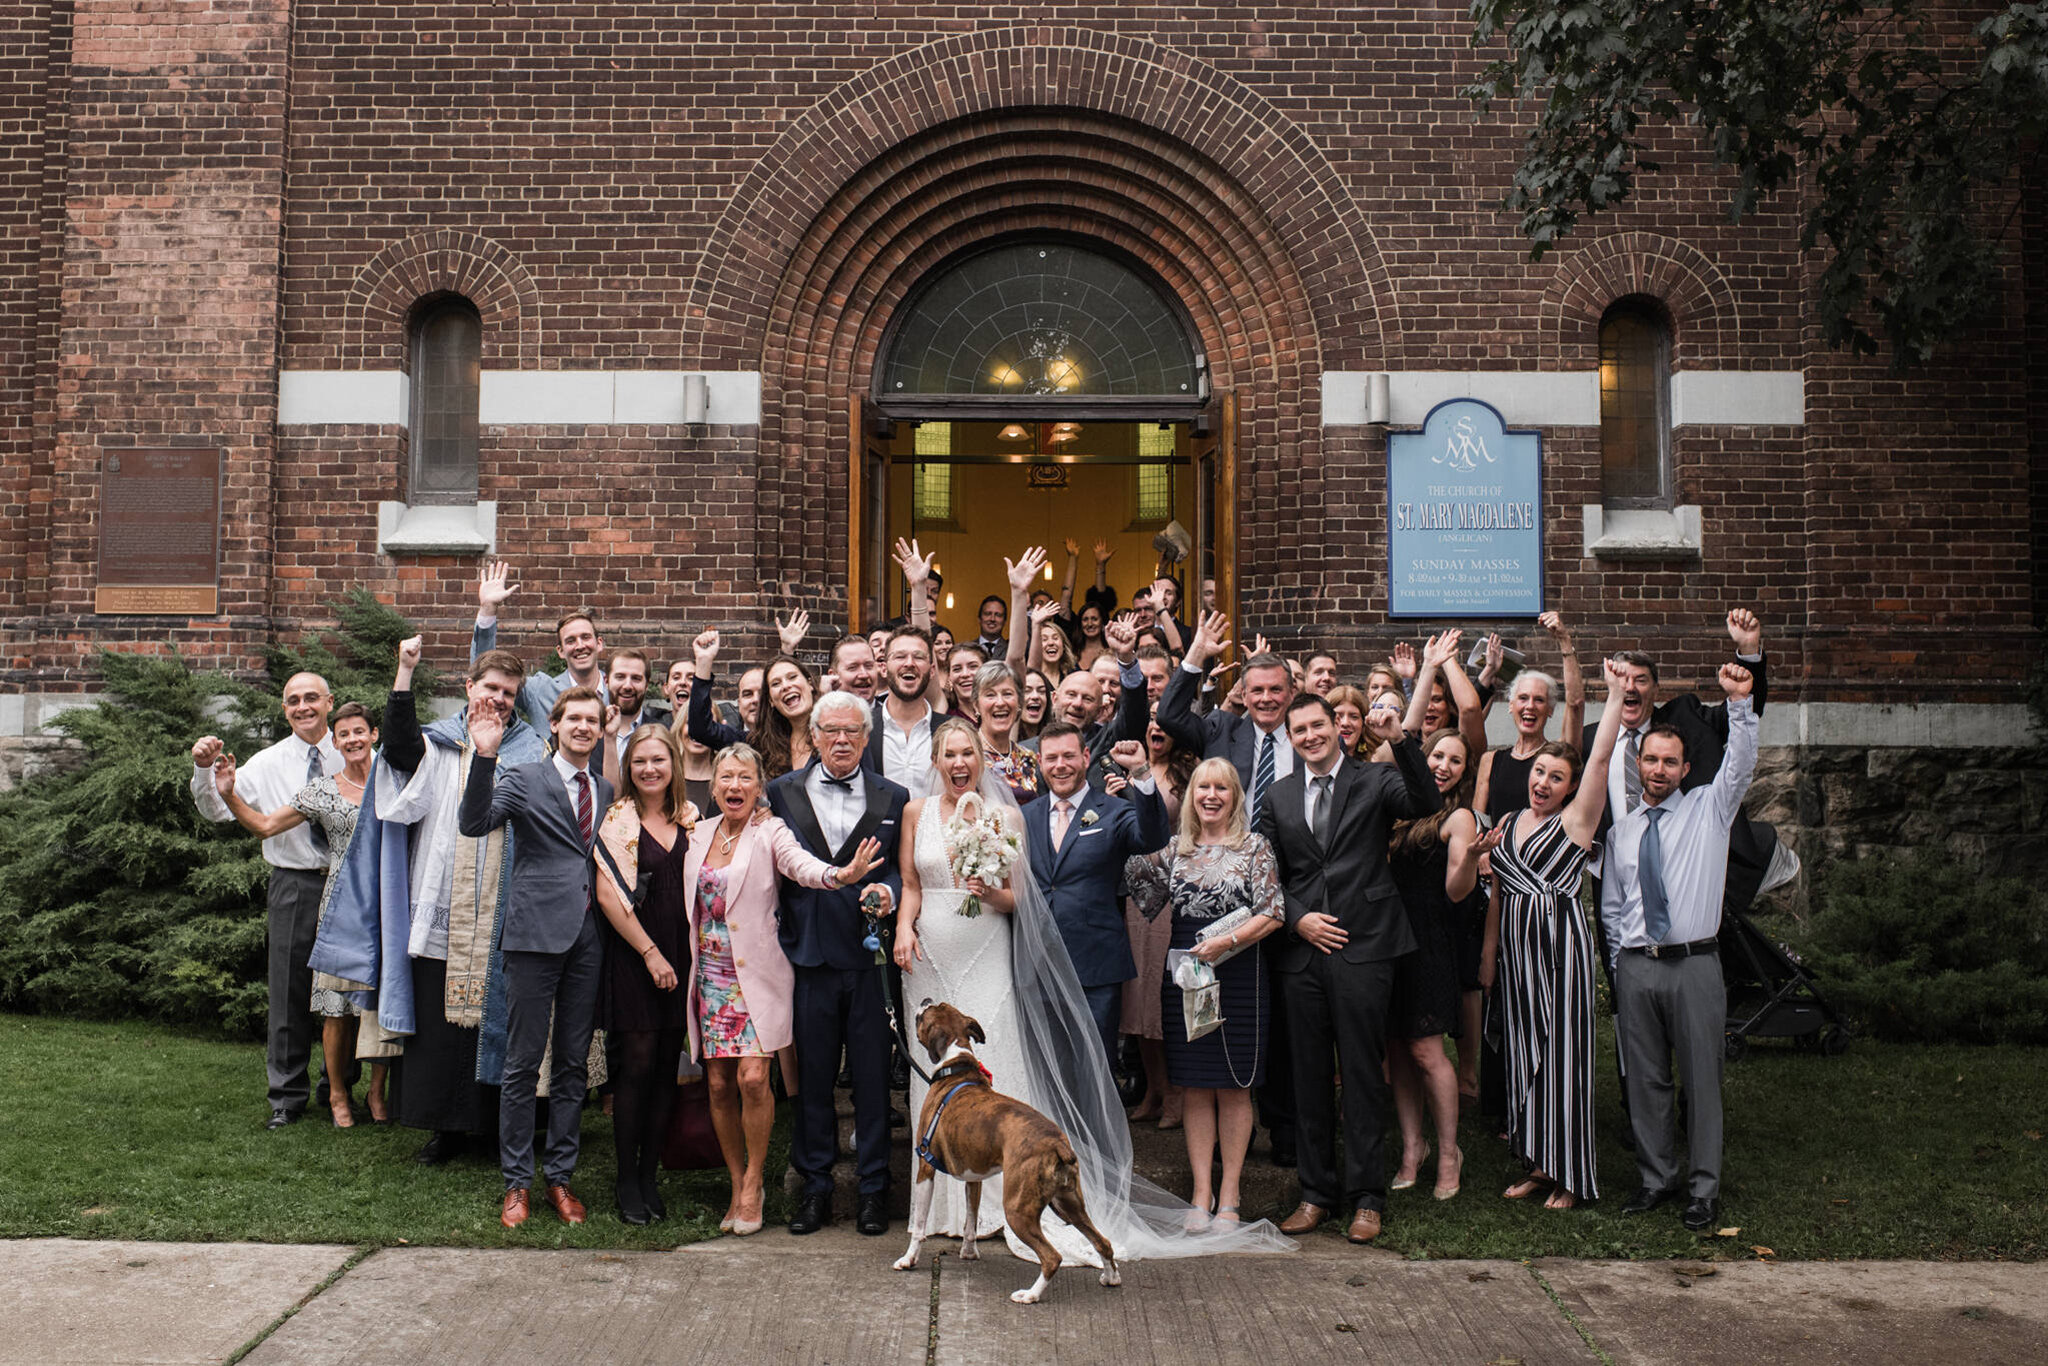 905-wedding-group-photo-church-toronto-fun-dogs-puppies-family-restaurant.jpg